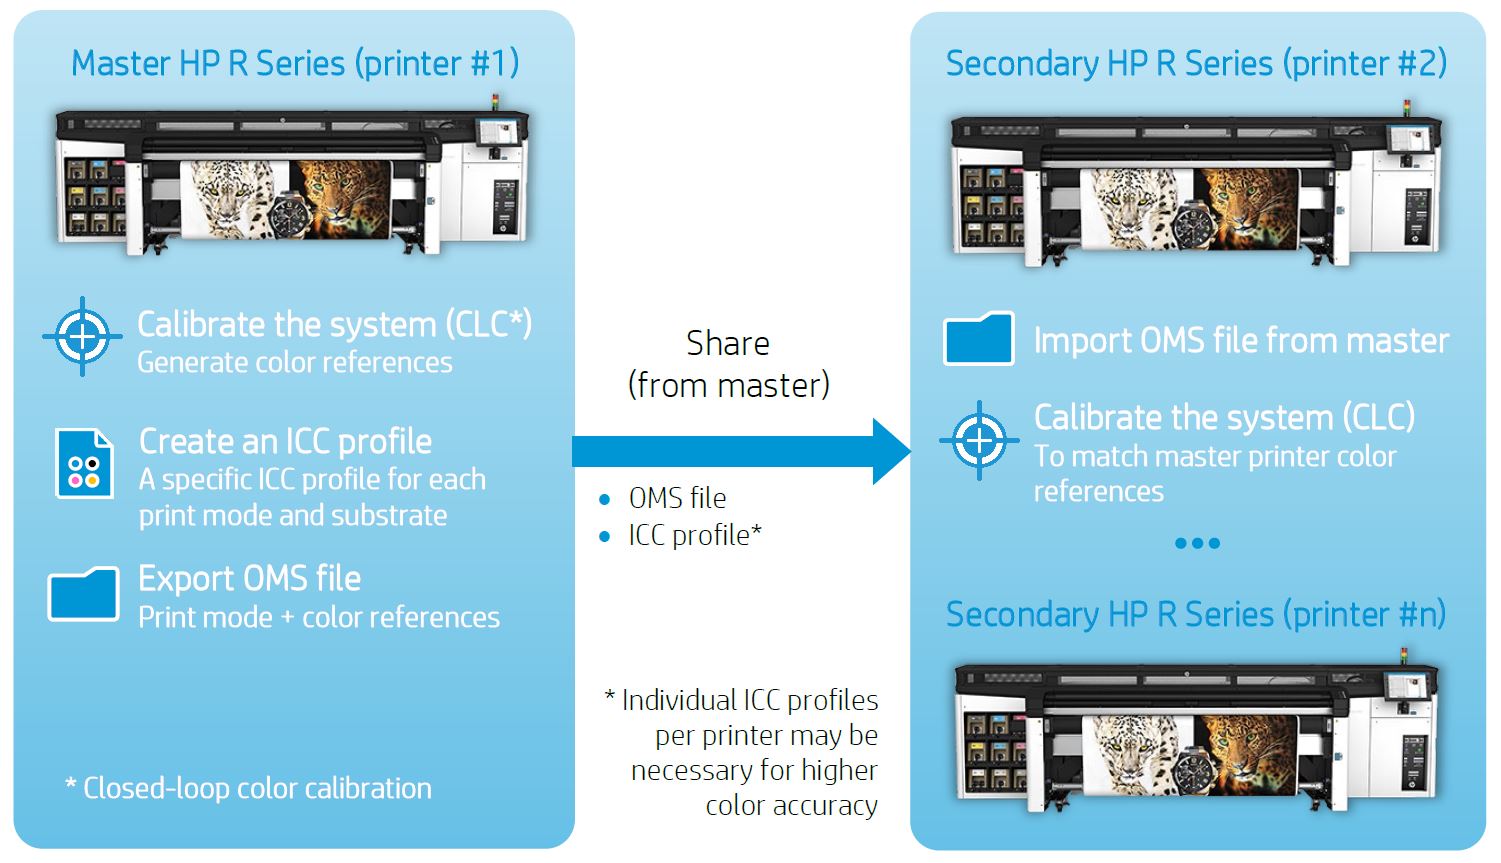 Master HP R Latex Series and Secondary HP R Series Printer